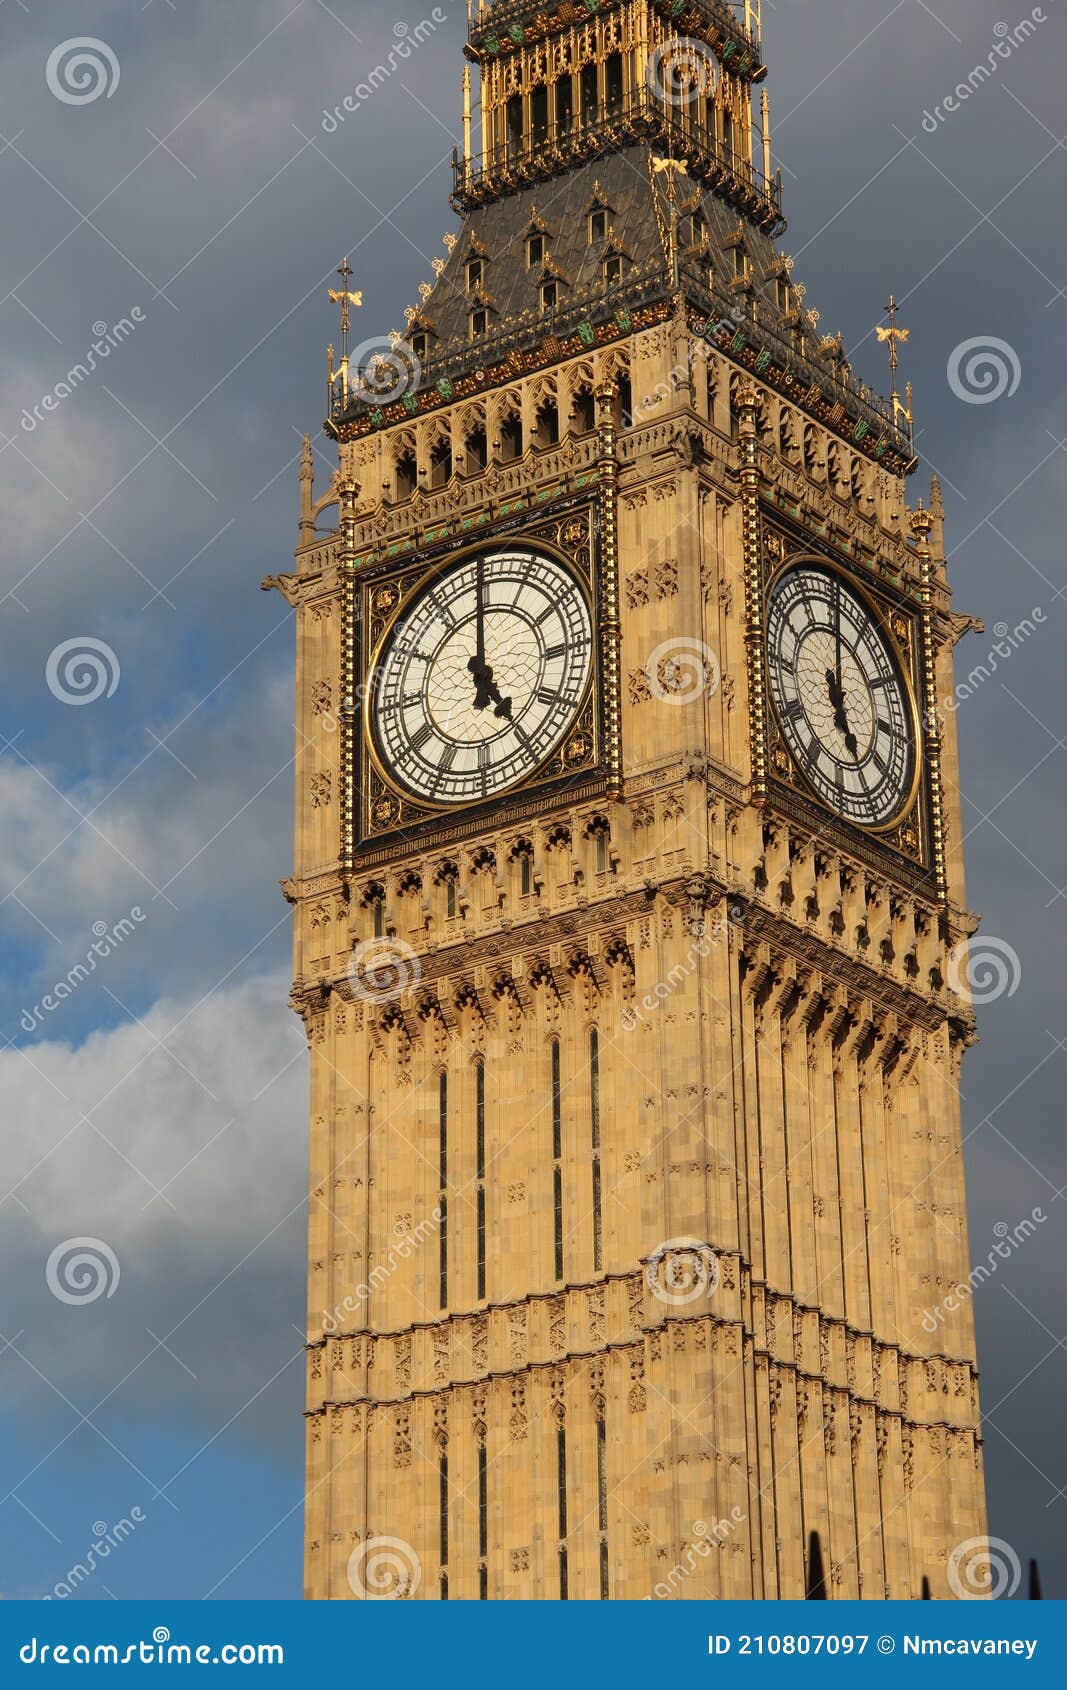 Big Ben - Elizabeth Tower Em Londres. Torre De Relógio De 90